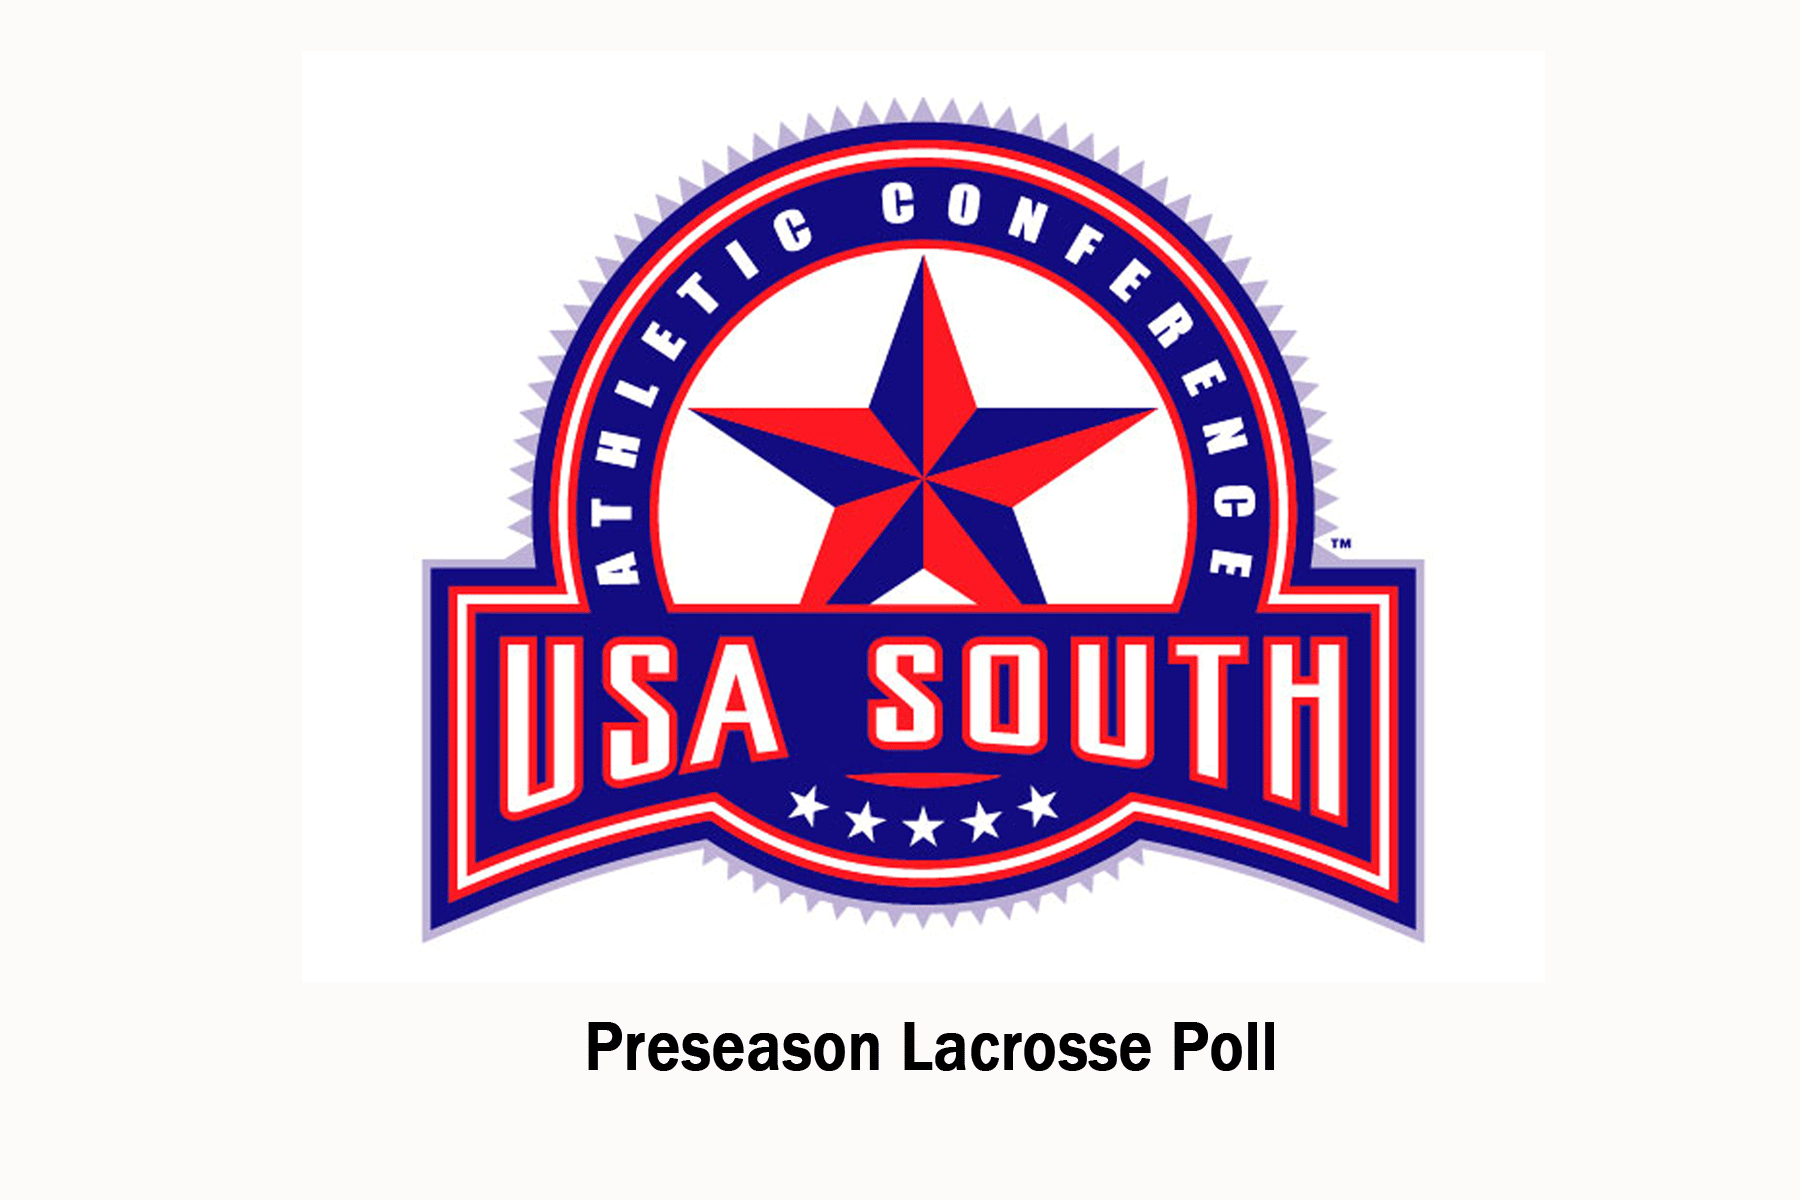 USA South releases preseason lacrosse polls